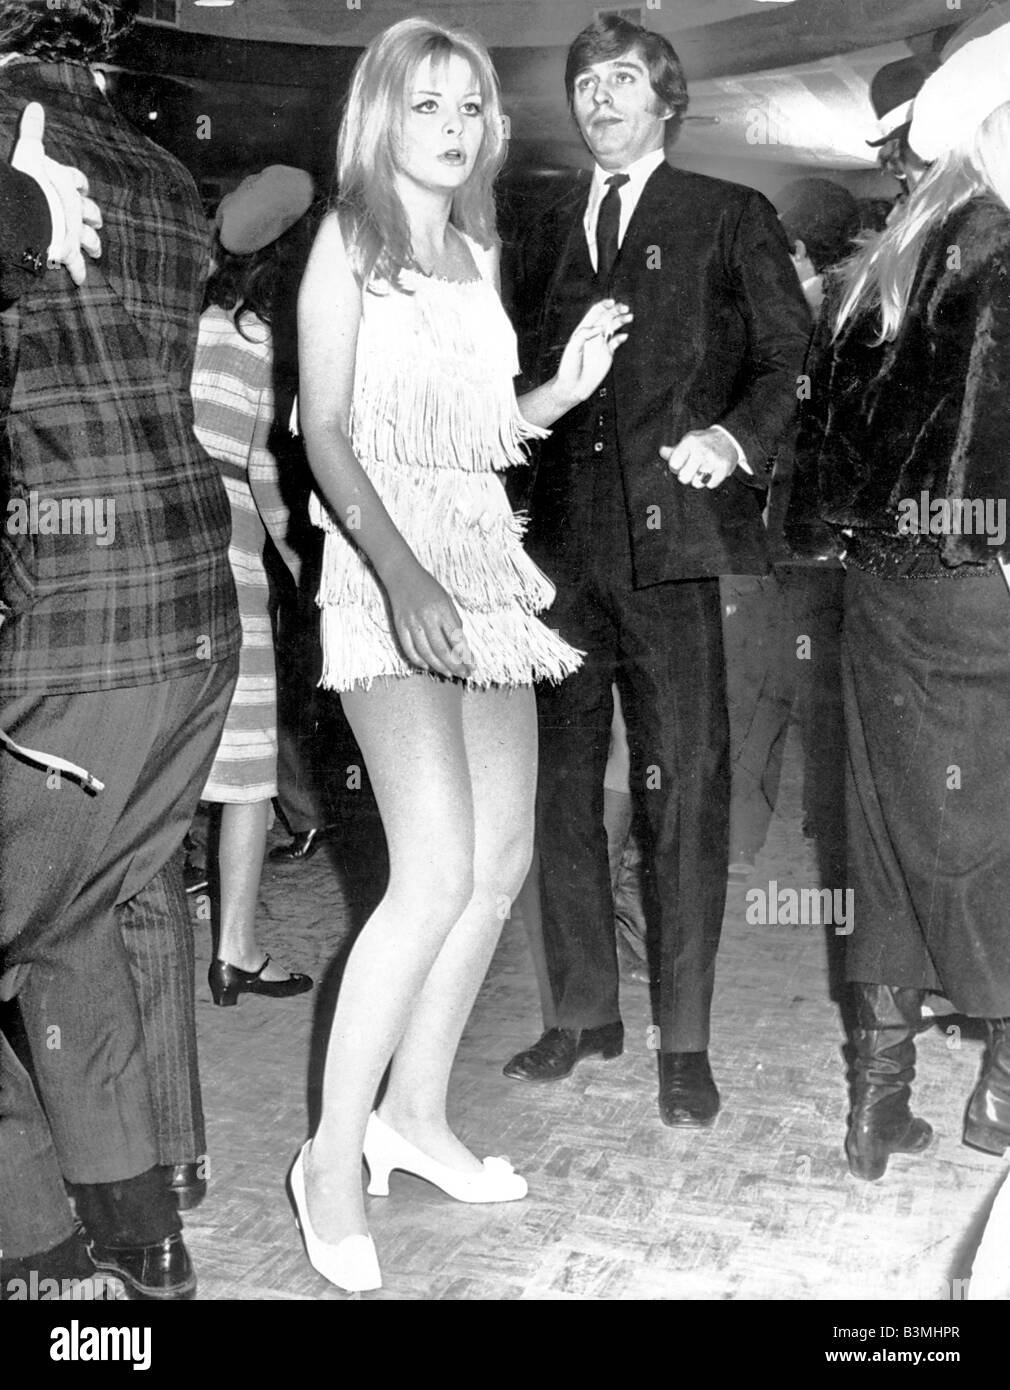 Mini skirt 1960s Black and White Stock Photos & Images - Alamy